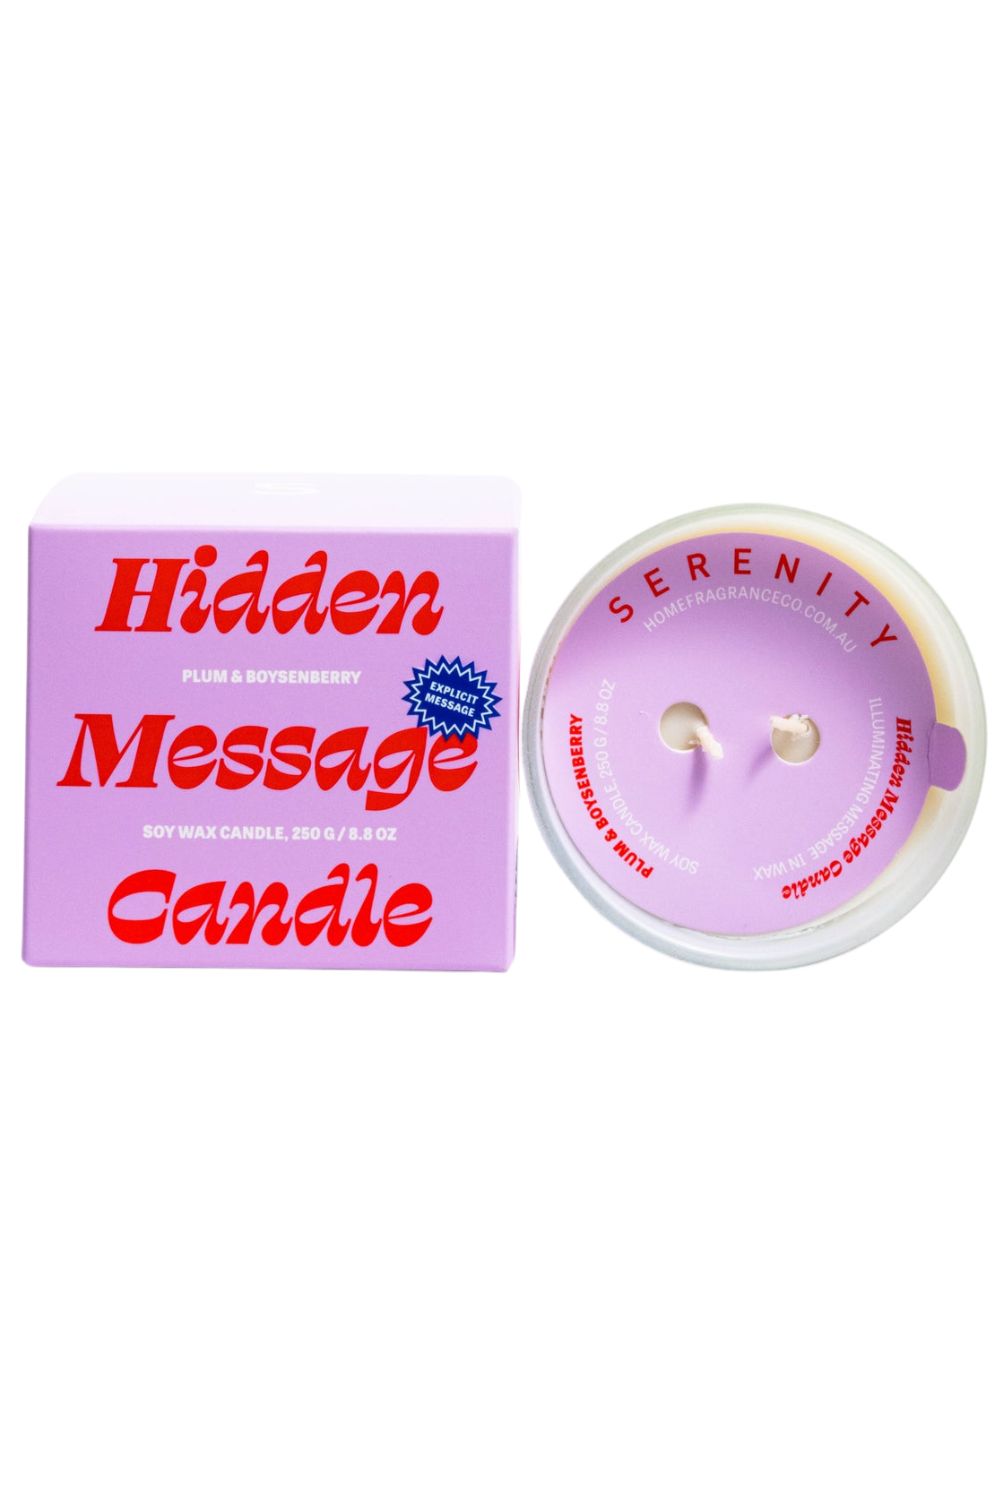 SECRET MESSAGE CANDLE - PLUM & BOYSENBERRY